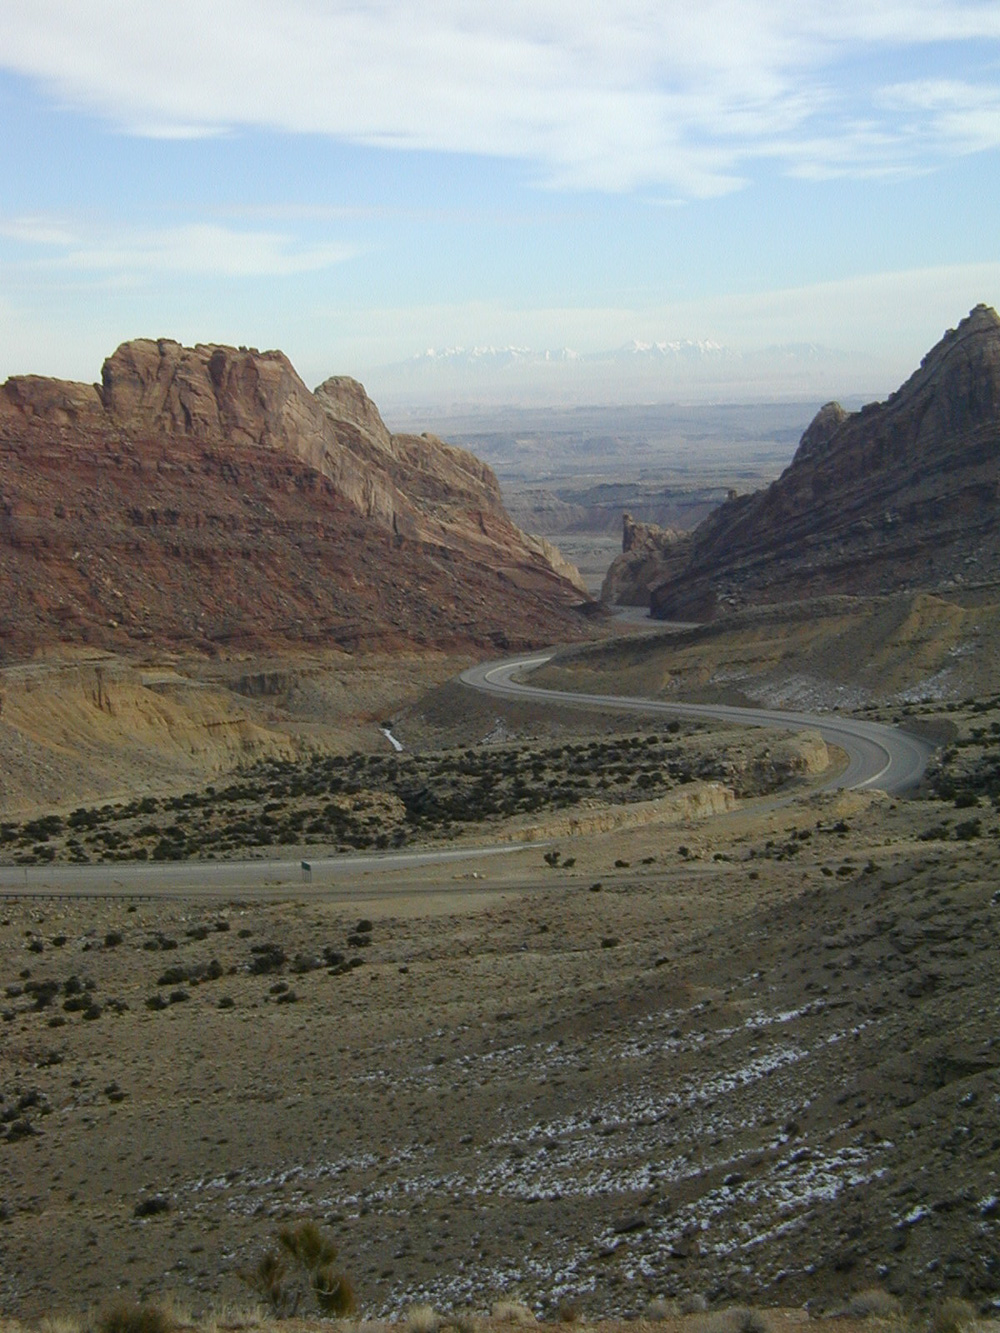 Mountain road in the desert